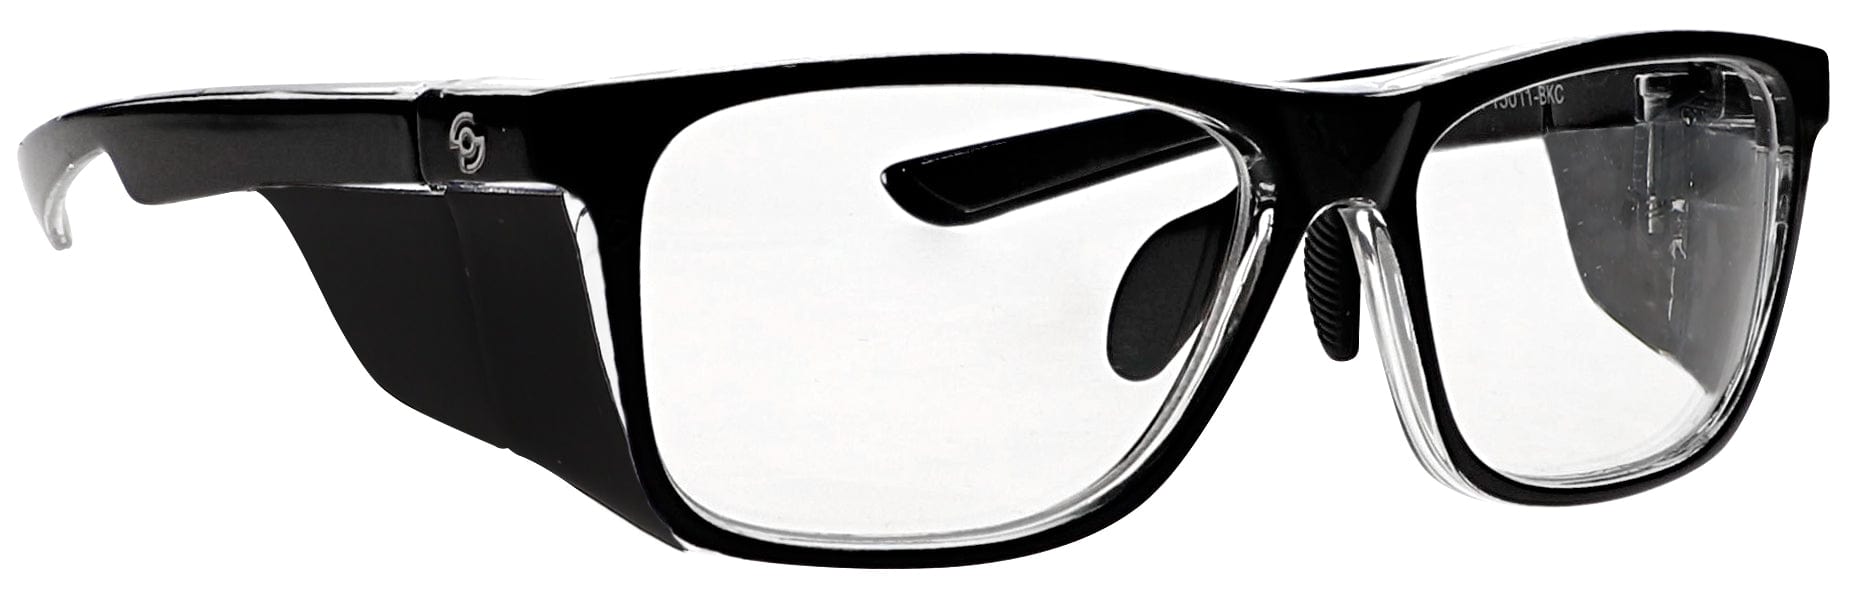 Phillips 15011 Radiation Glasses with Black Frame